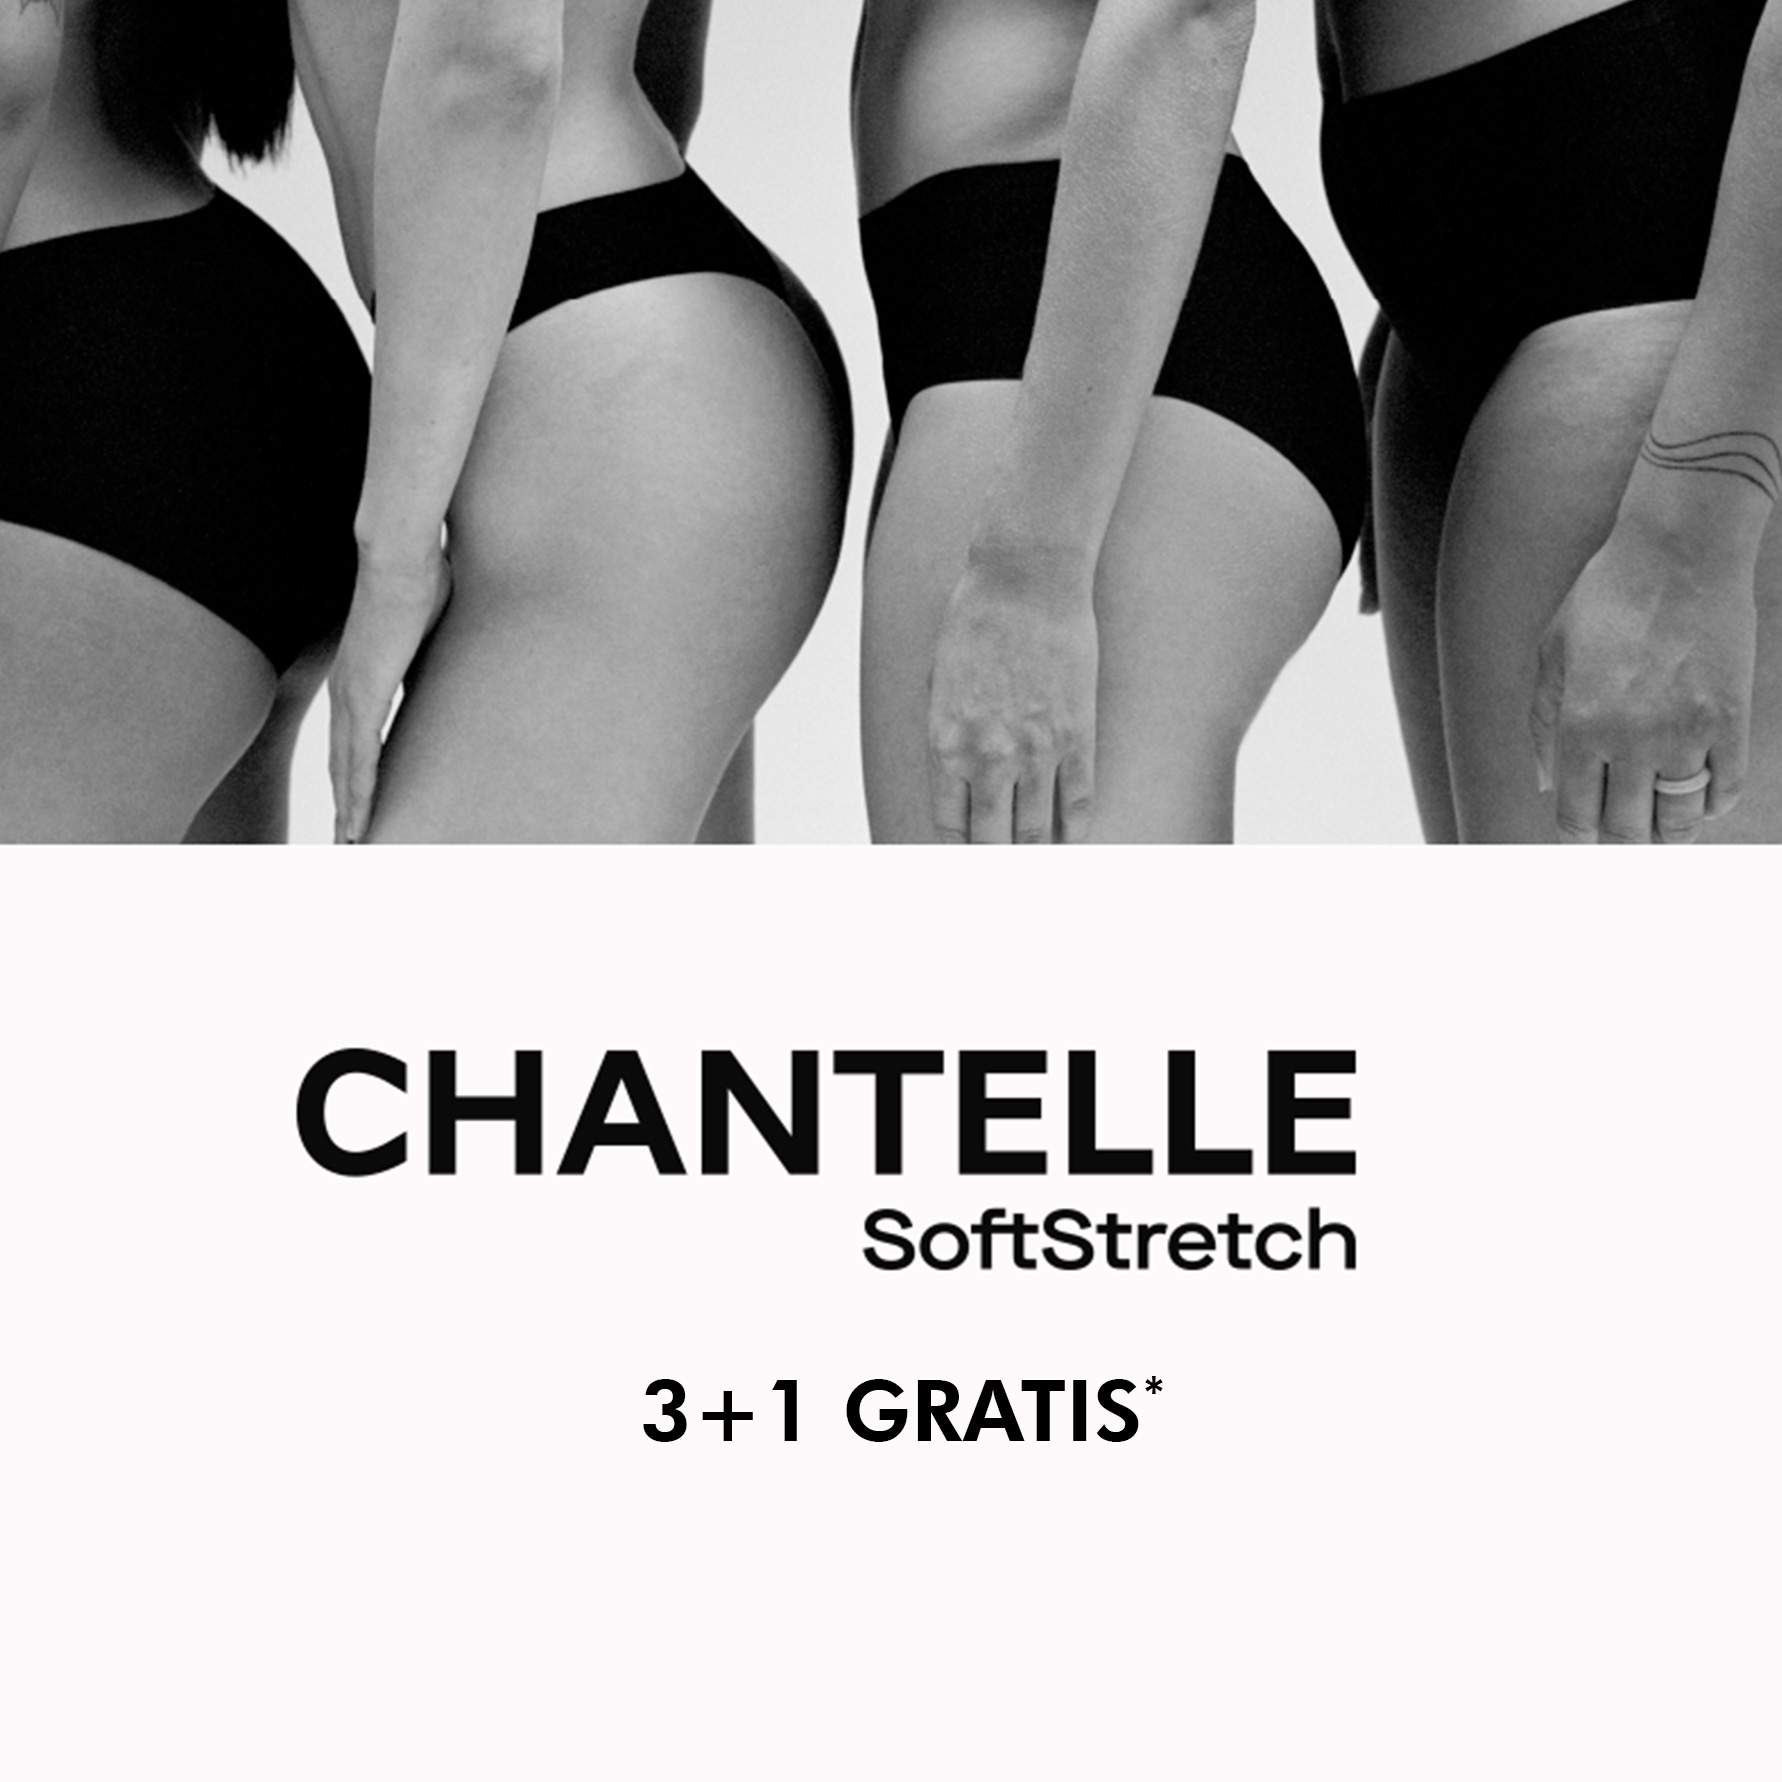 Chantelle SoftStretch 3+1 Gratis